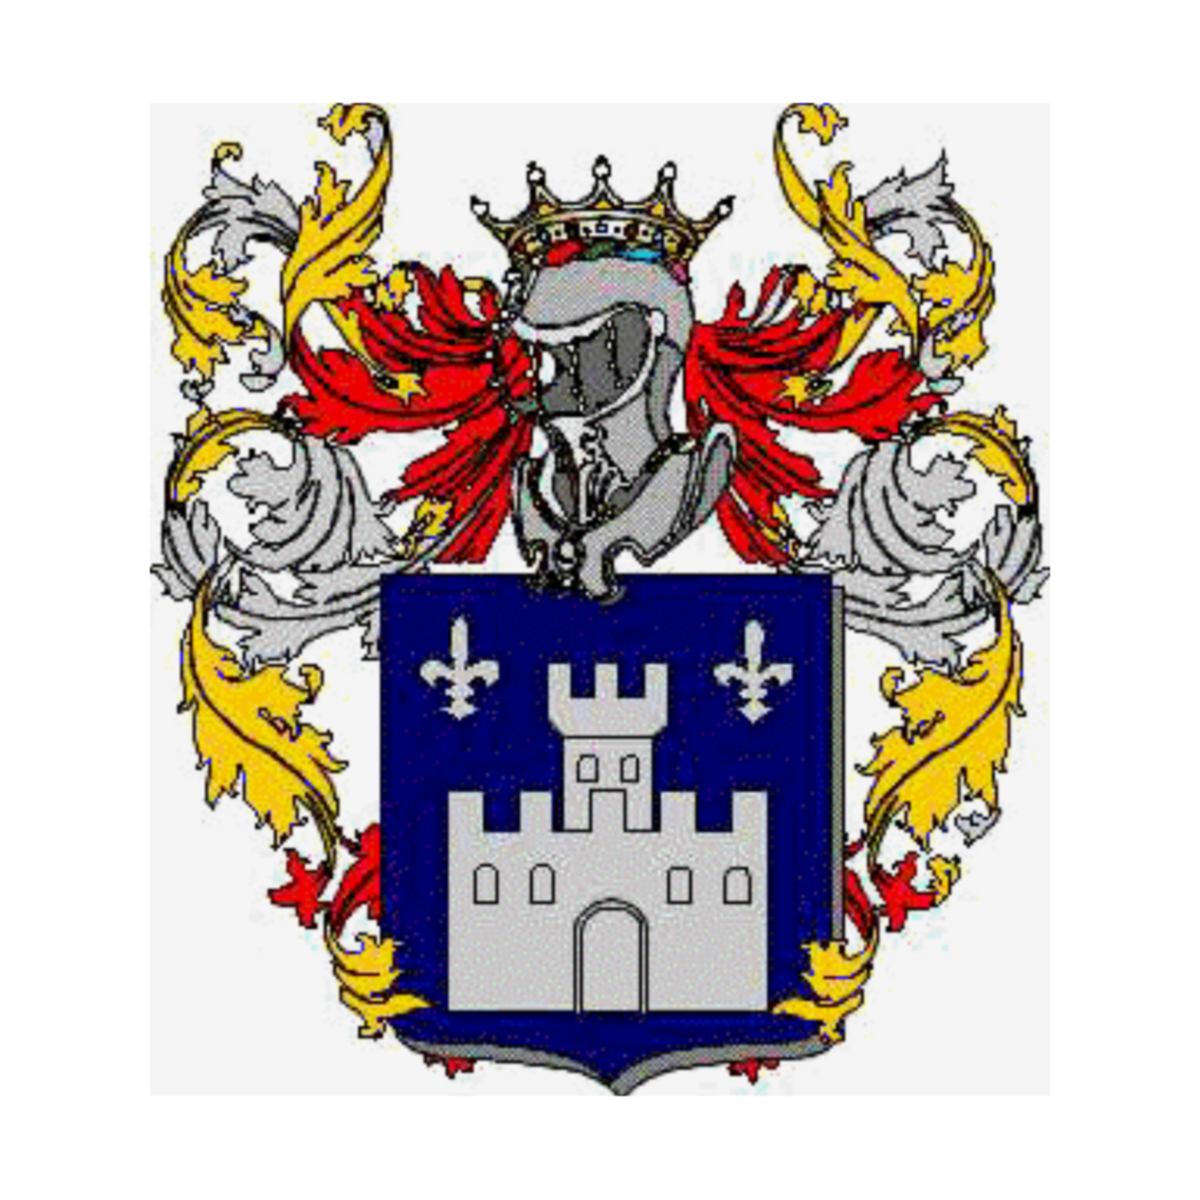 Escudo de la familiaMedolago, Medolaghi,Medolago-Albani,Medolago-Albani-Martinengo-Villagana